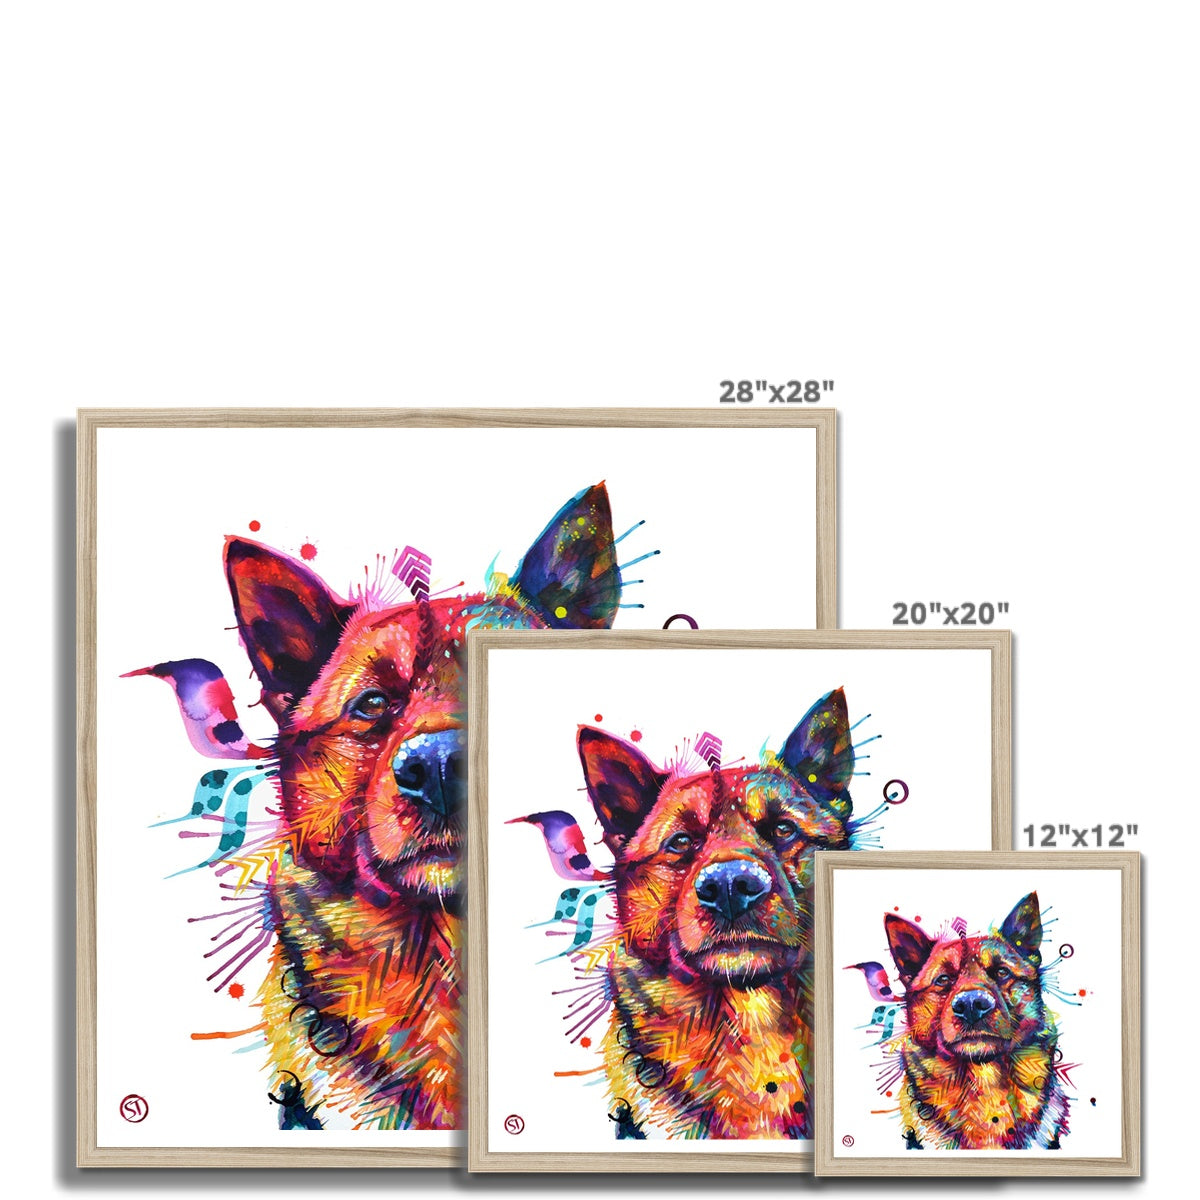 Wall Art | Dog Portrait | Pet Portrait Artists | Animal Print | Framed Art | Dog Artwork